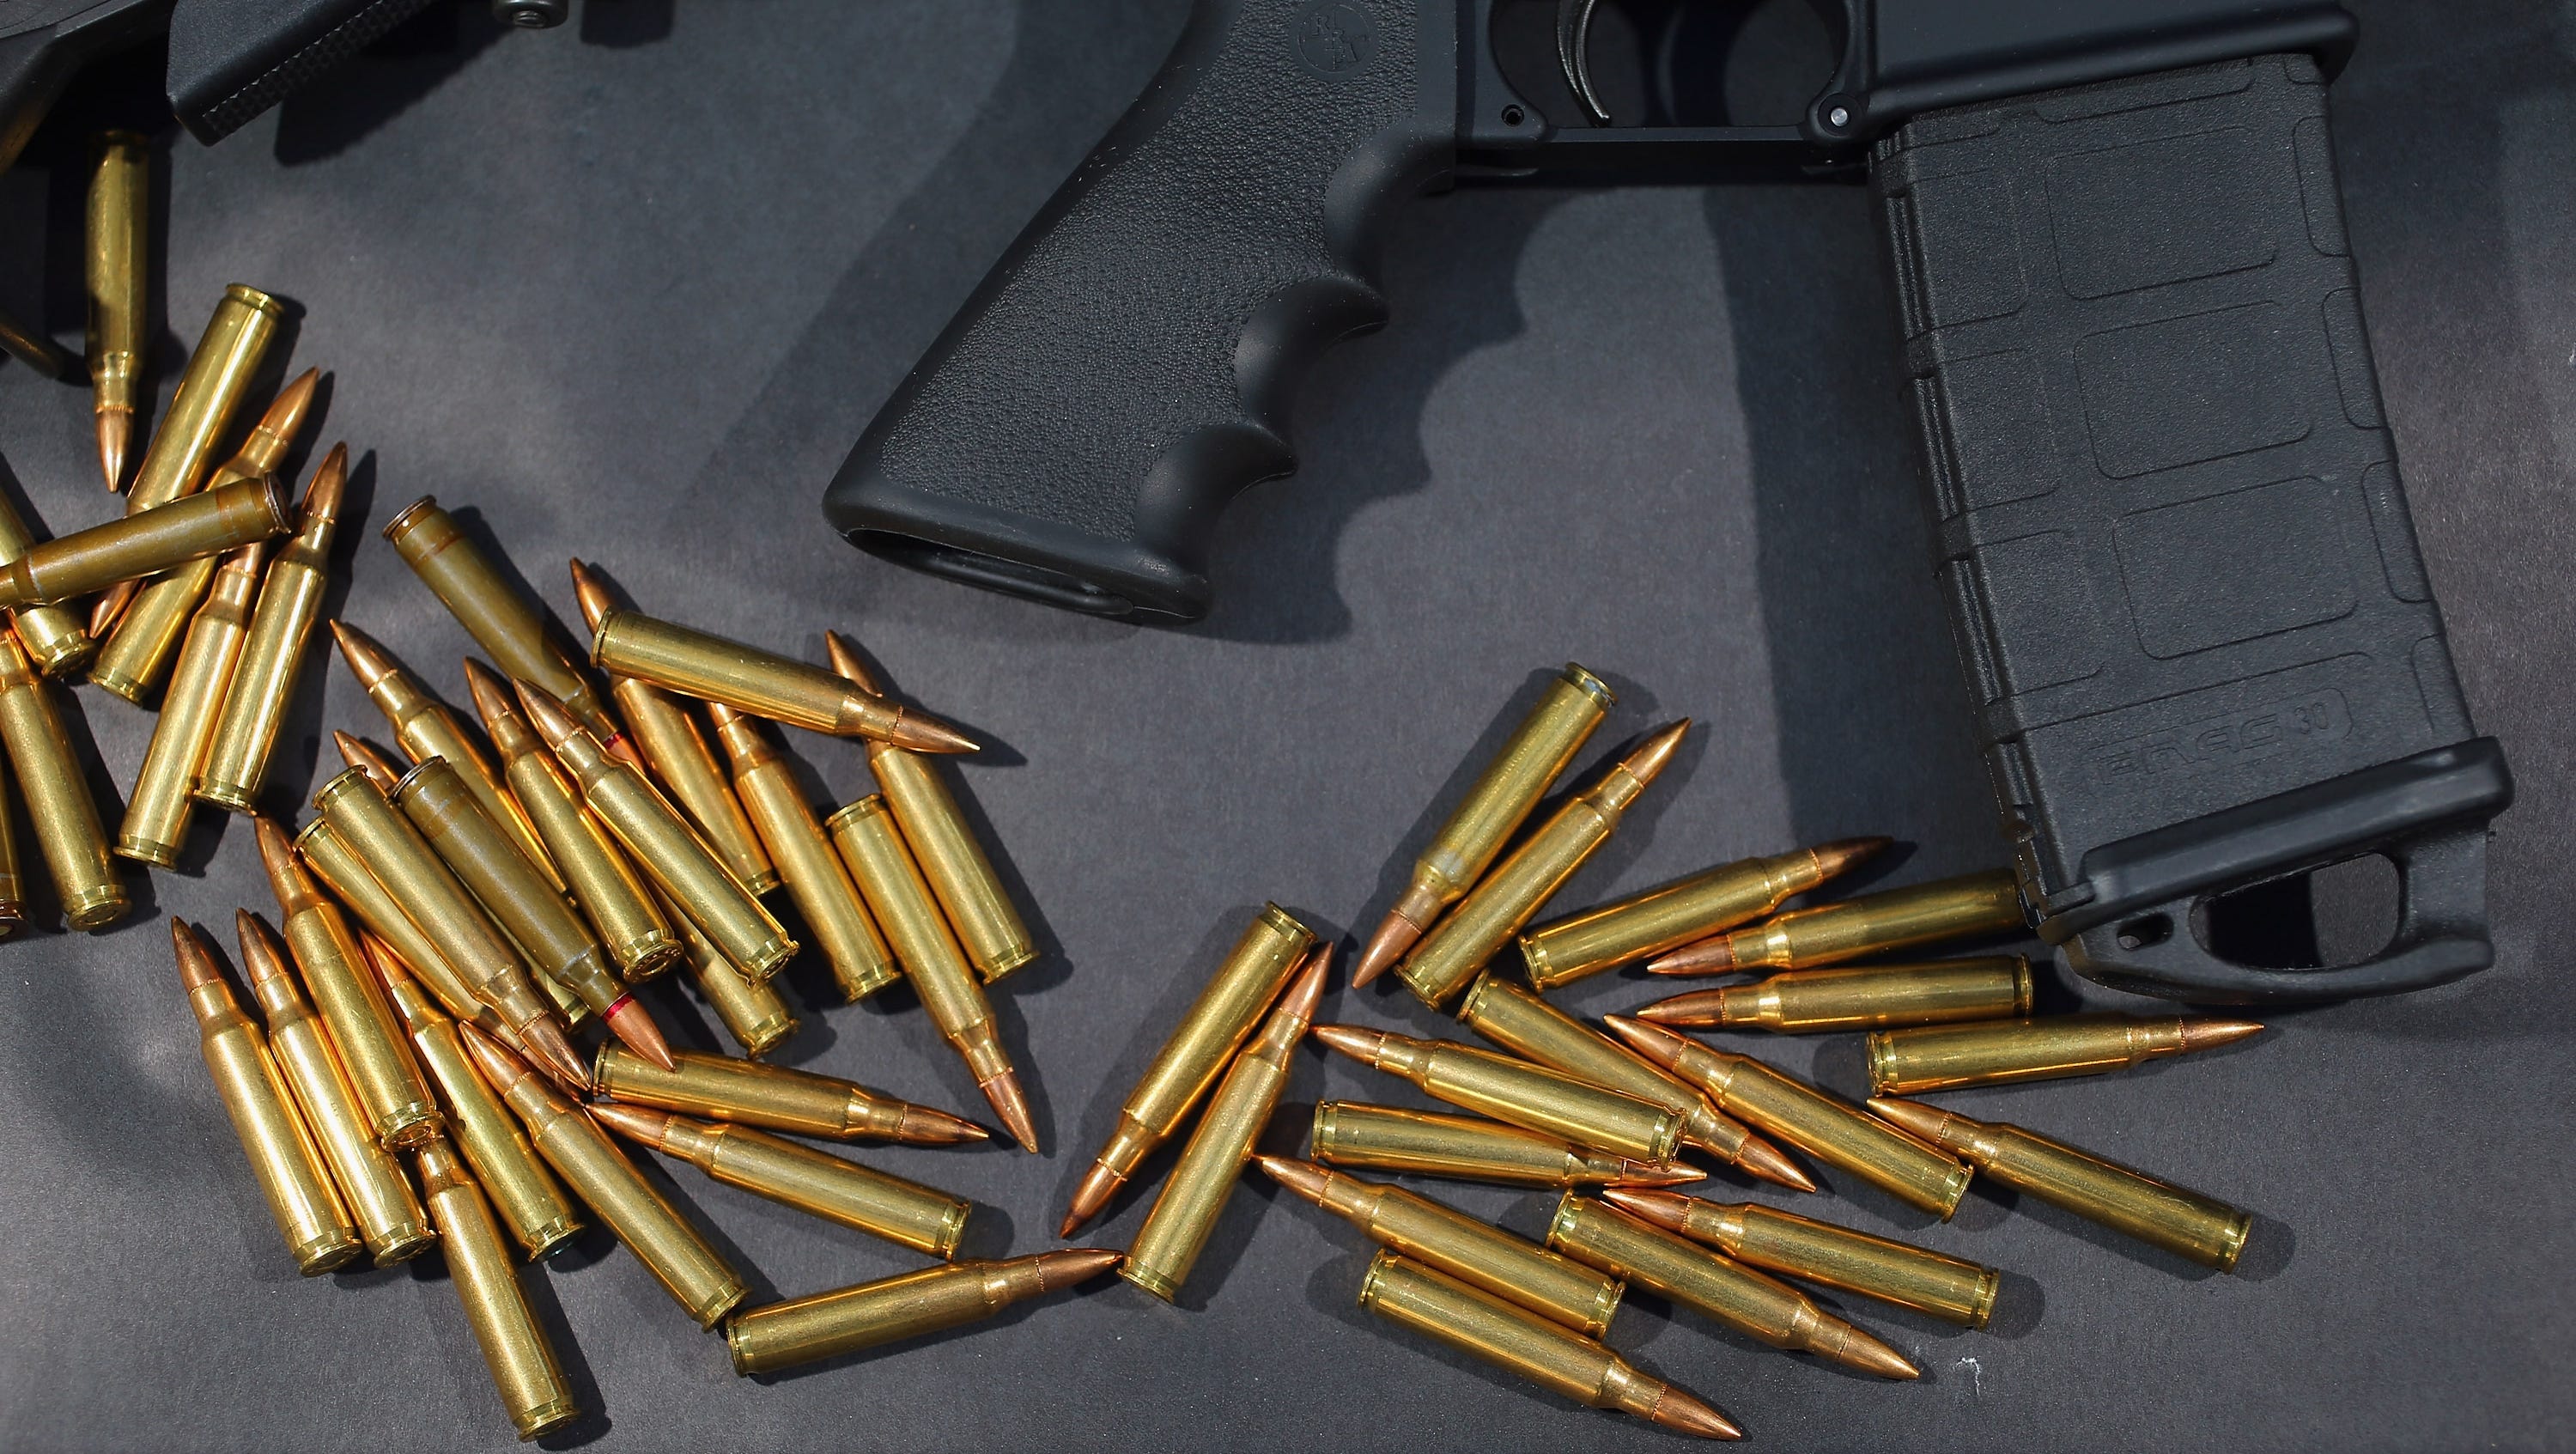 Gun dealers report shortages of ammunition